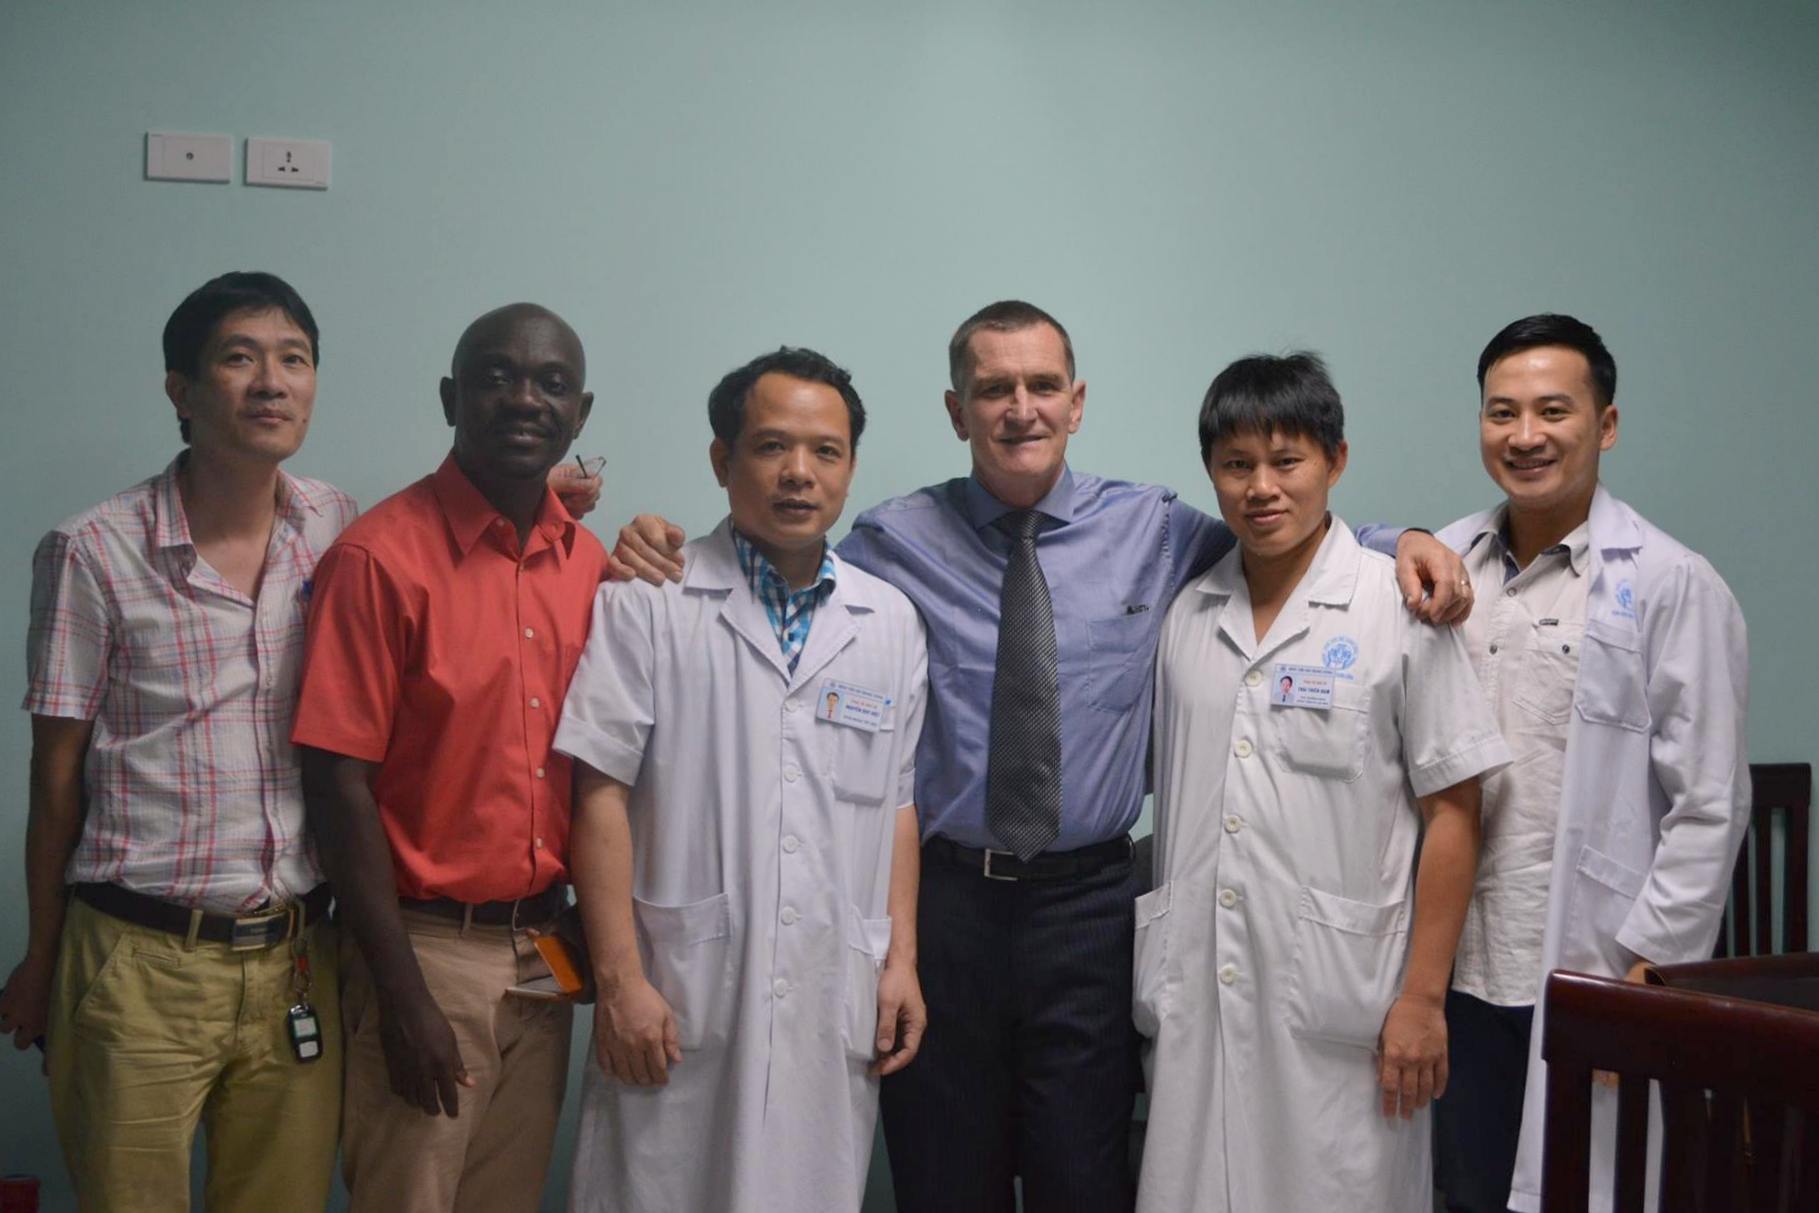 Kind cuts for kids DEK Foundation Vietnam hospital doctors